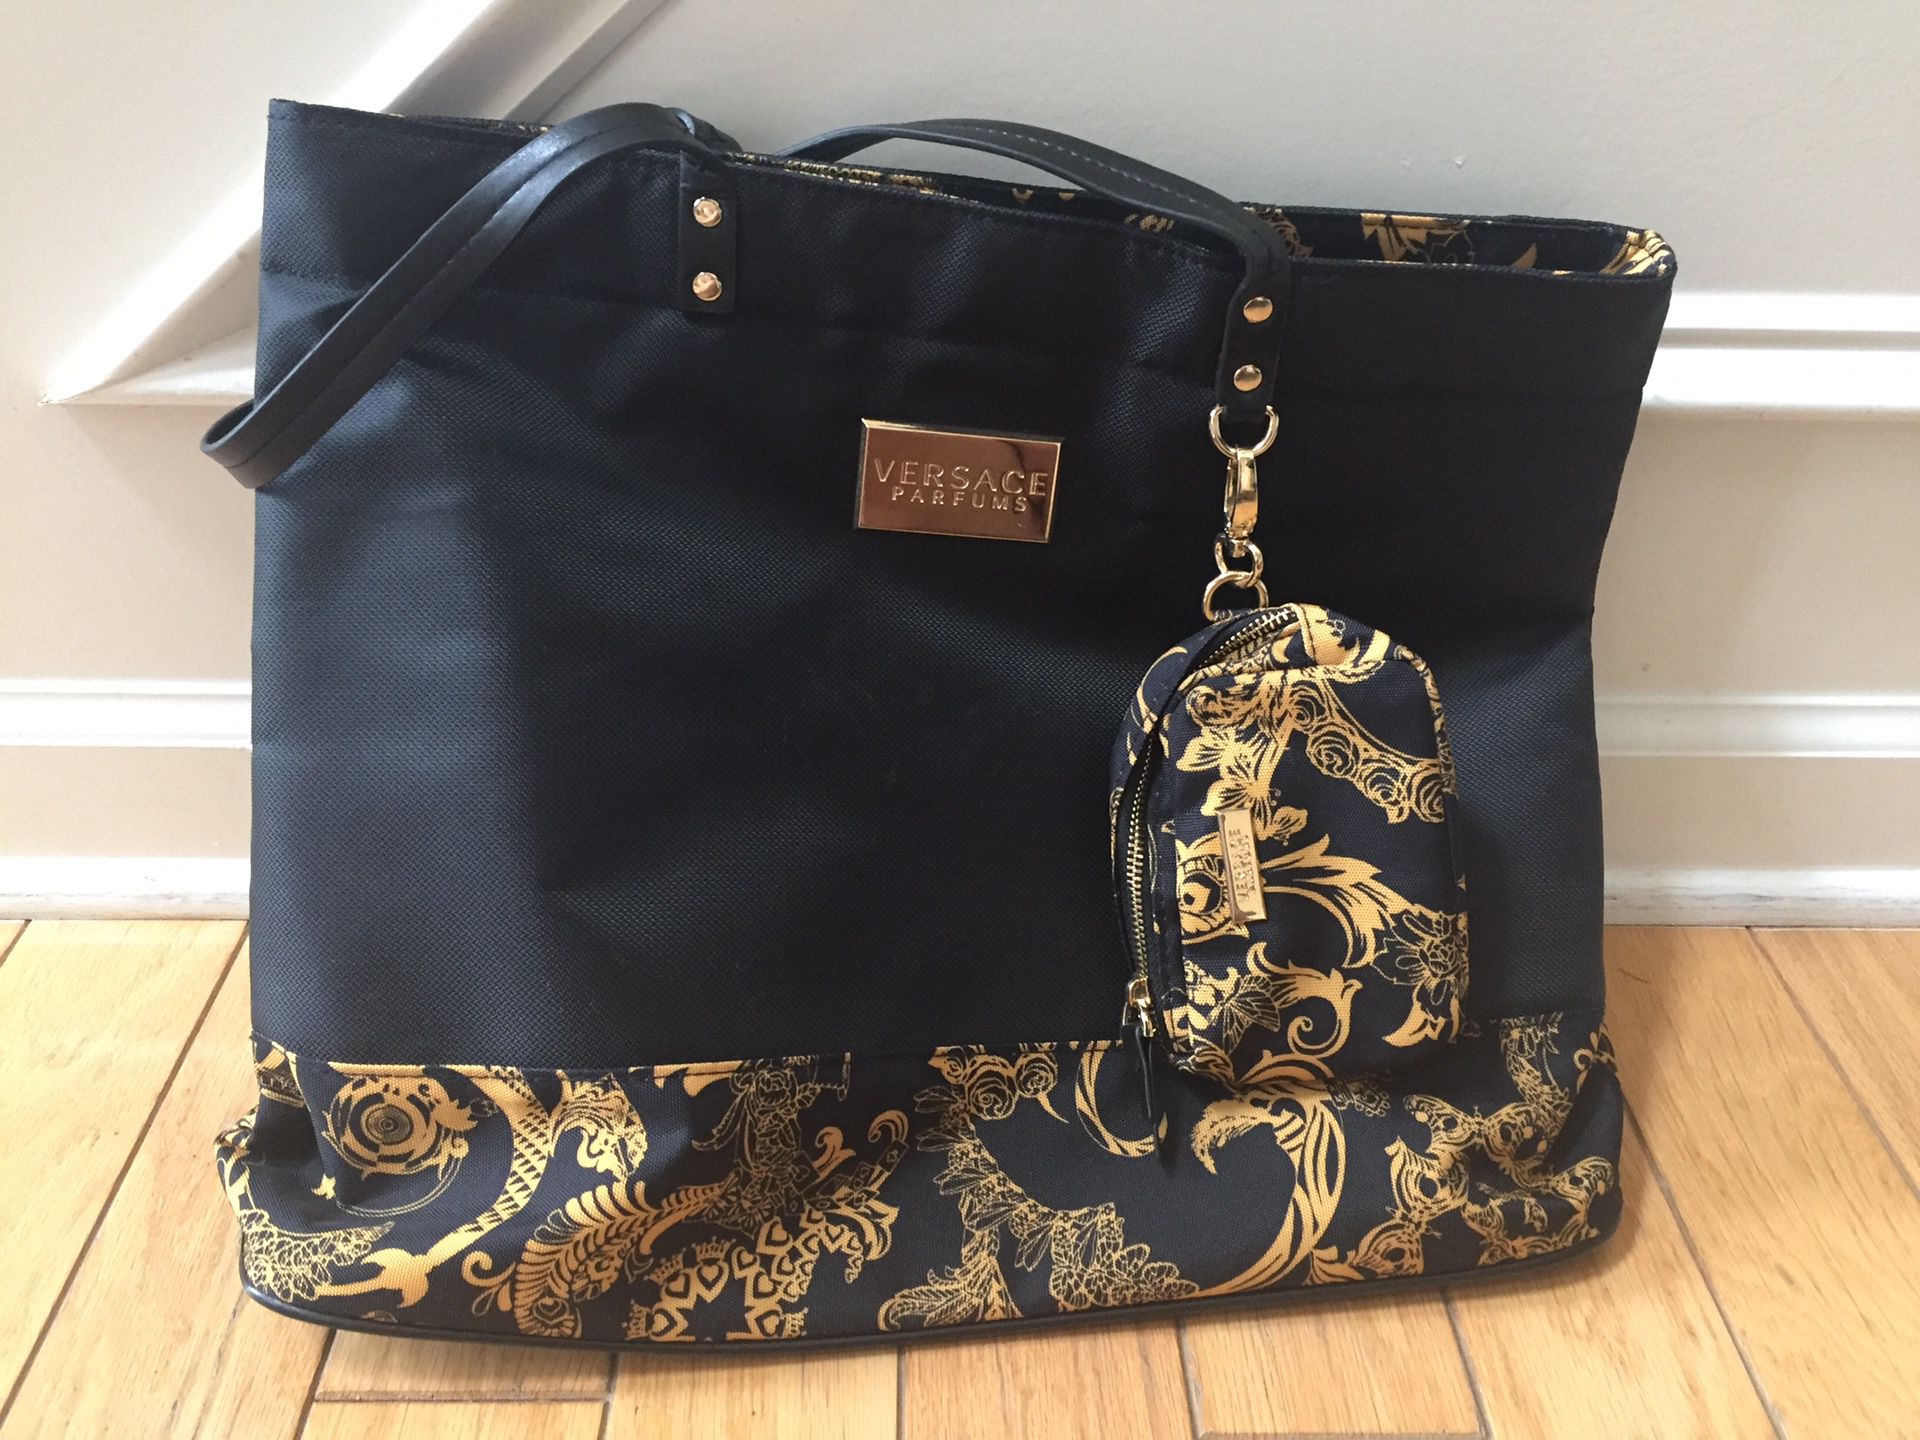 Versace parfums bag with coin purse